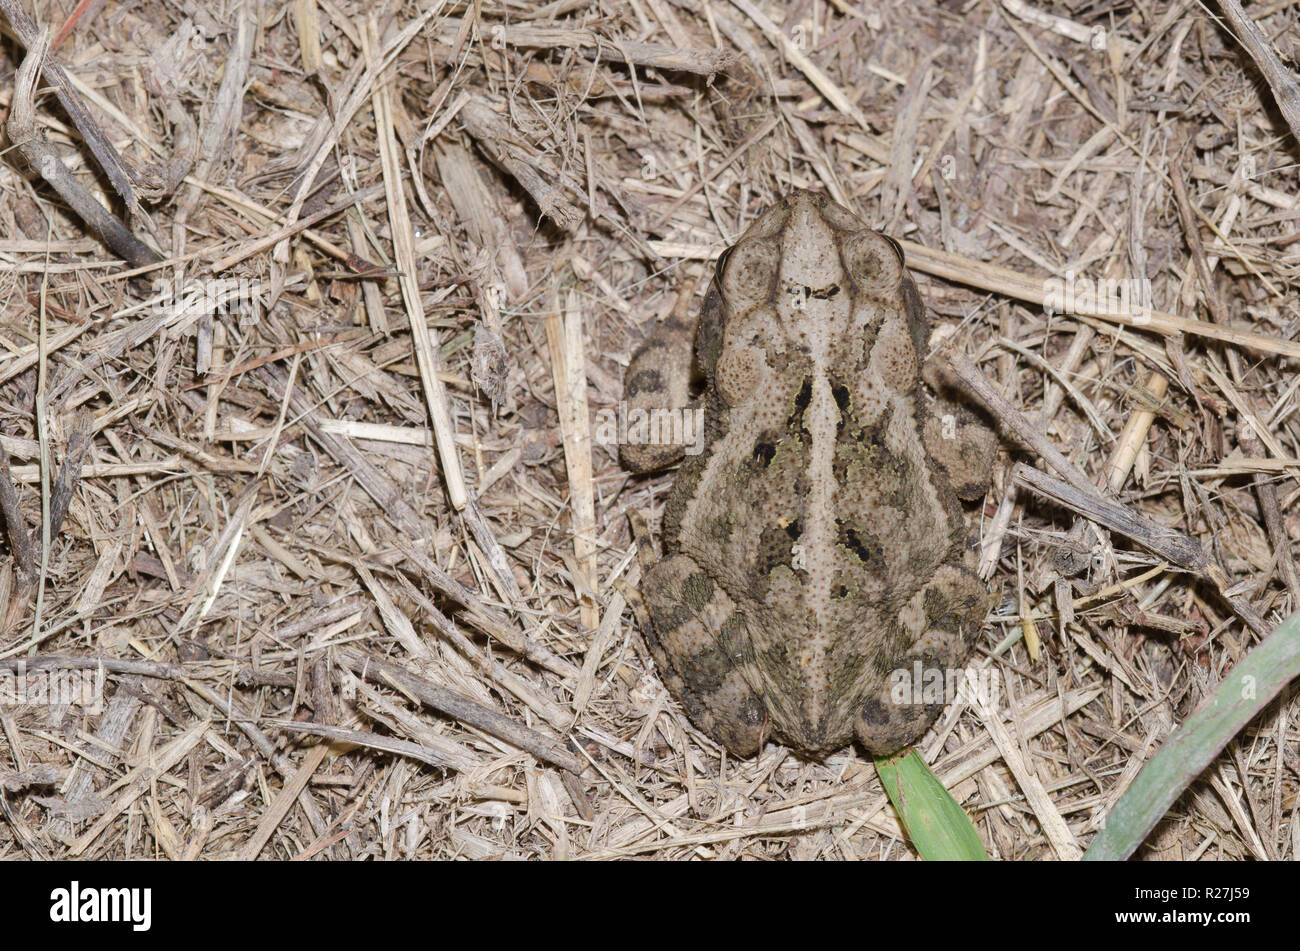 Gulf Coast Toad, Nebulifer valliceps, juvenile camouflaged on the ground Stock Photo